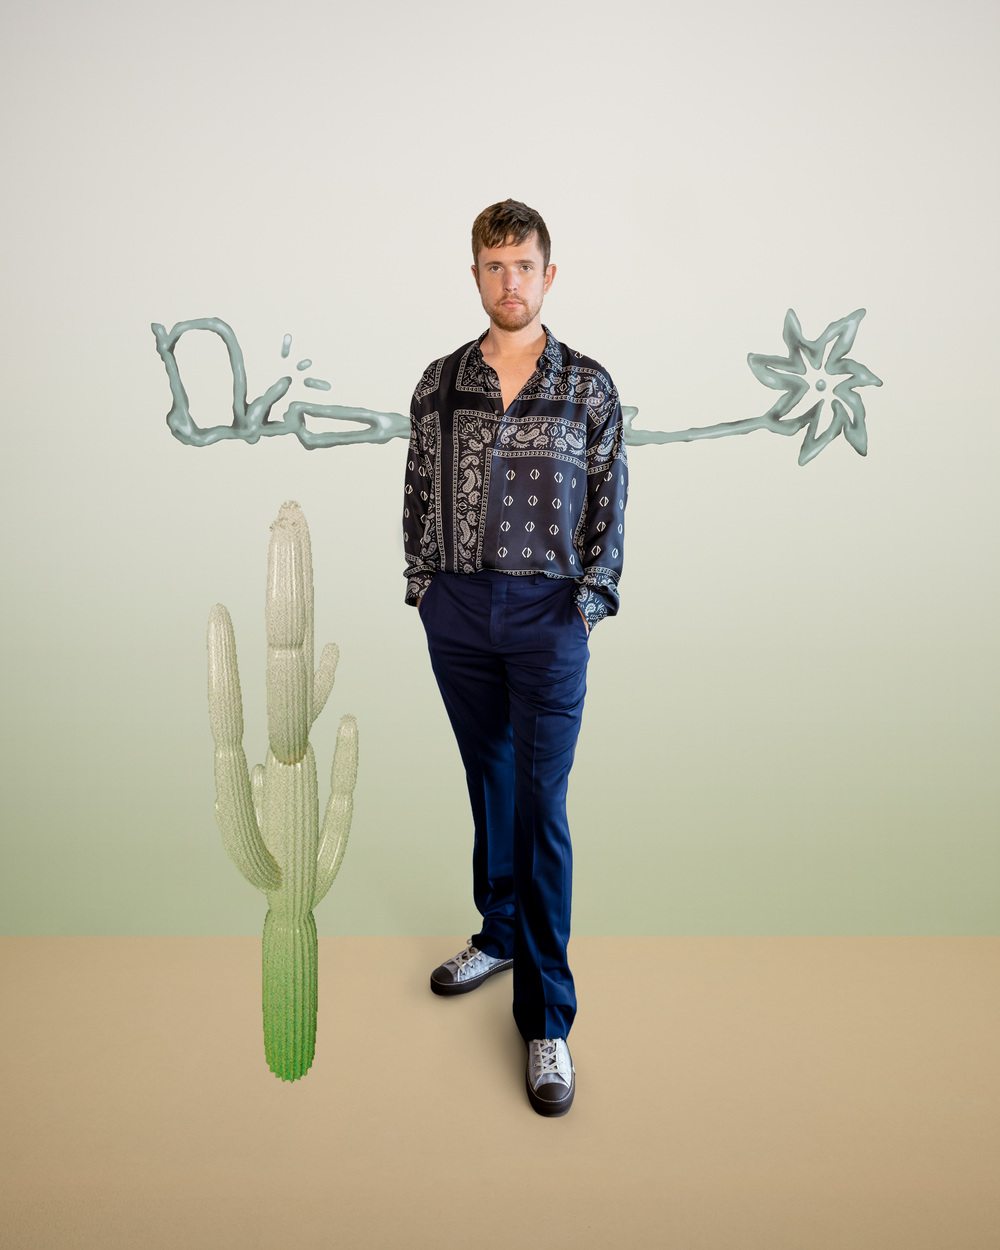 James Blake wearing the Cactus Jack Dior collection 